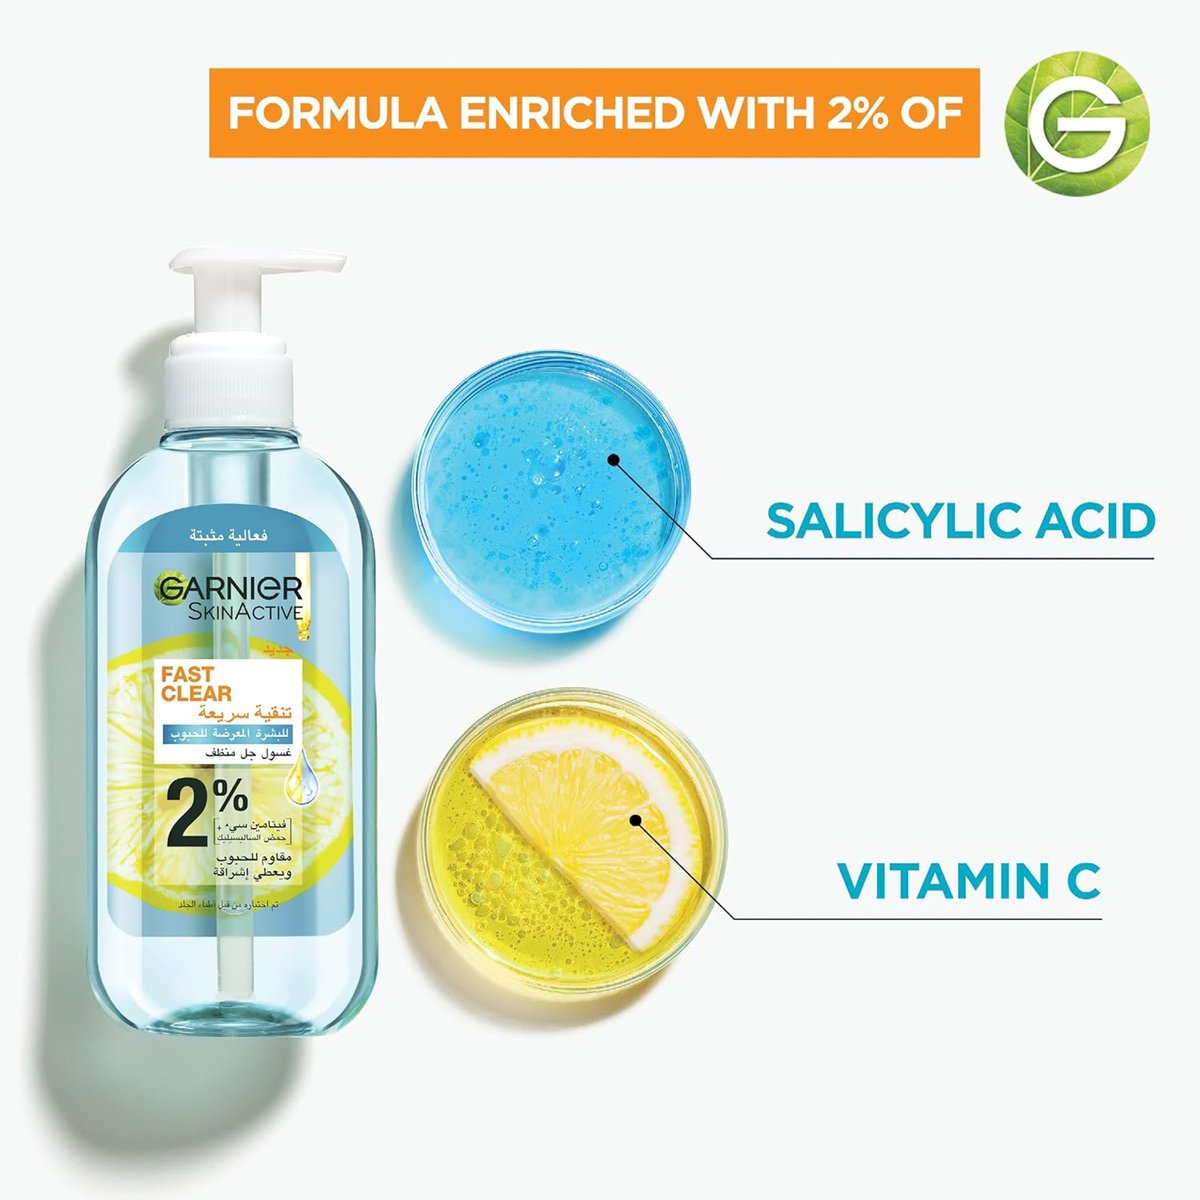 Garnier Skin Active Fast Clear Gel Wash, 2%, 200 ml